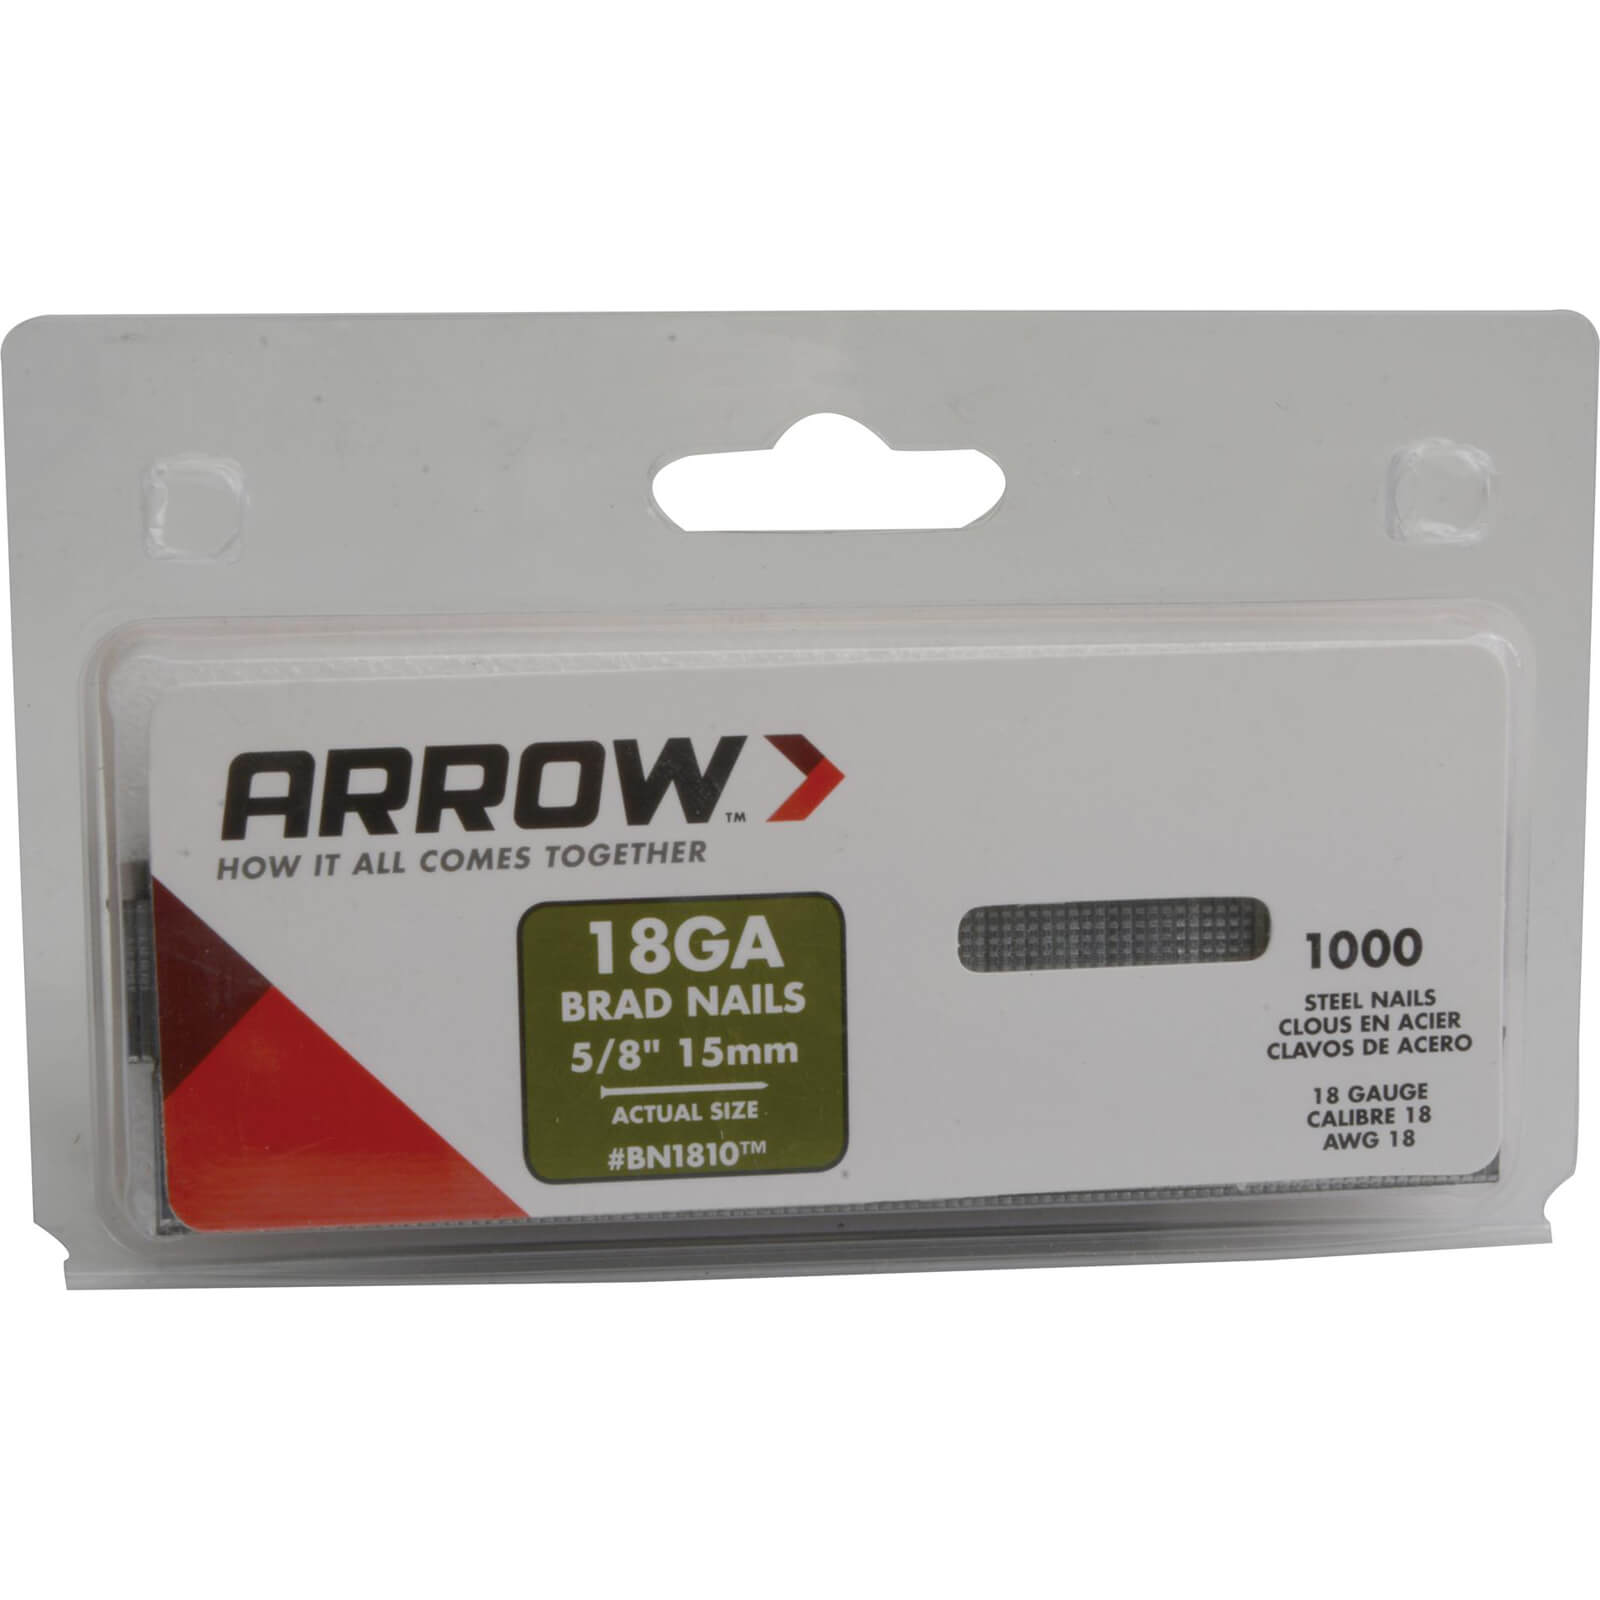 Image of Arrow 18 Gauge Brad Nails 15mm Pack of 1000